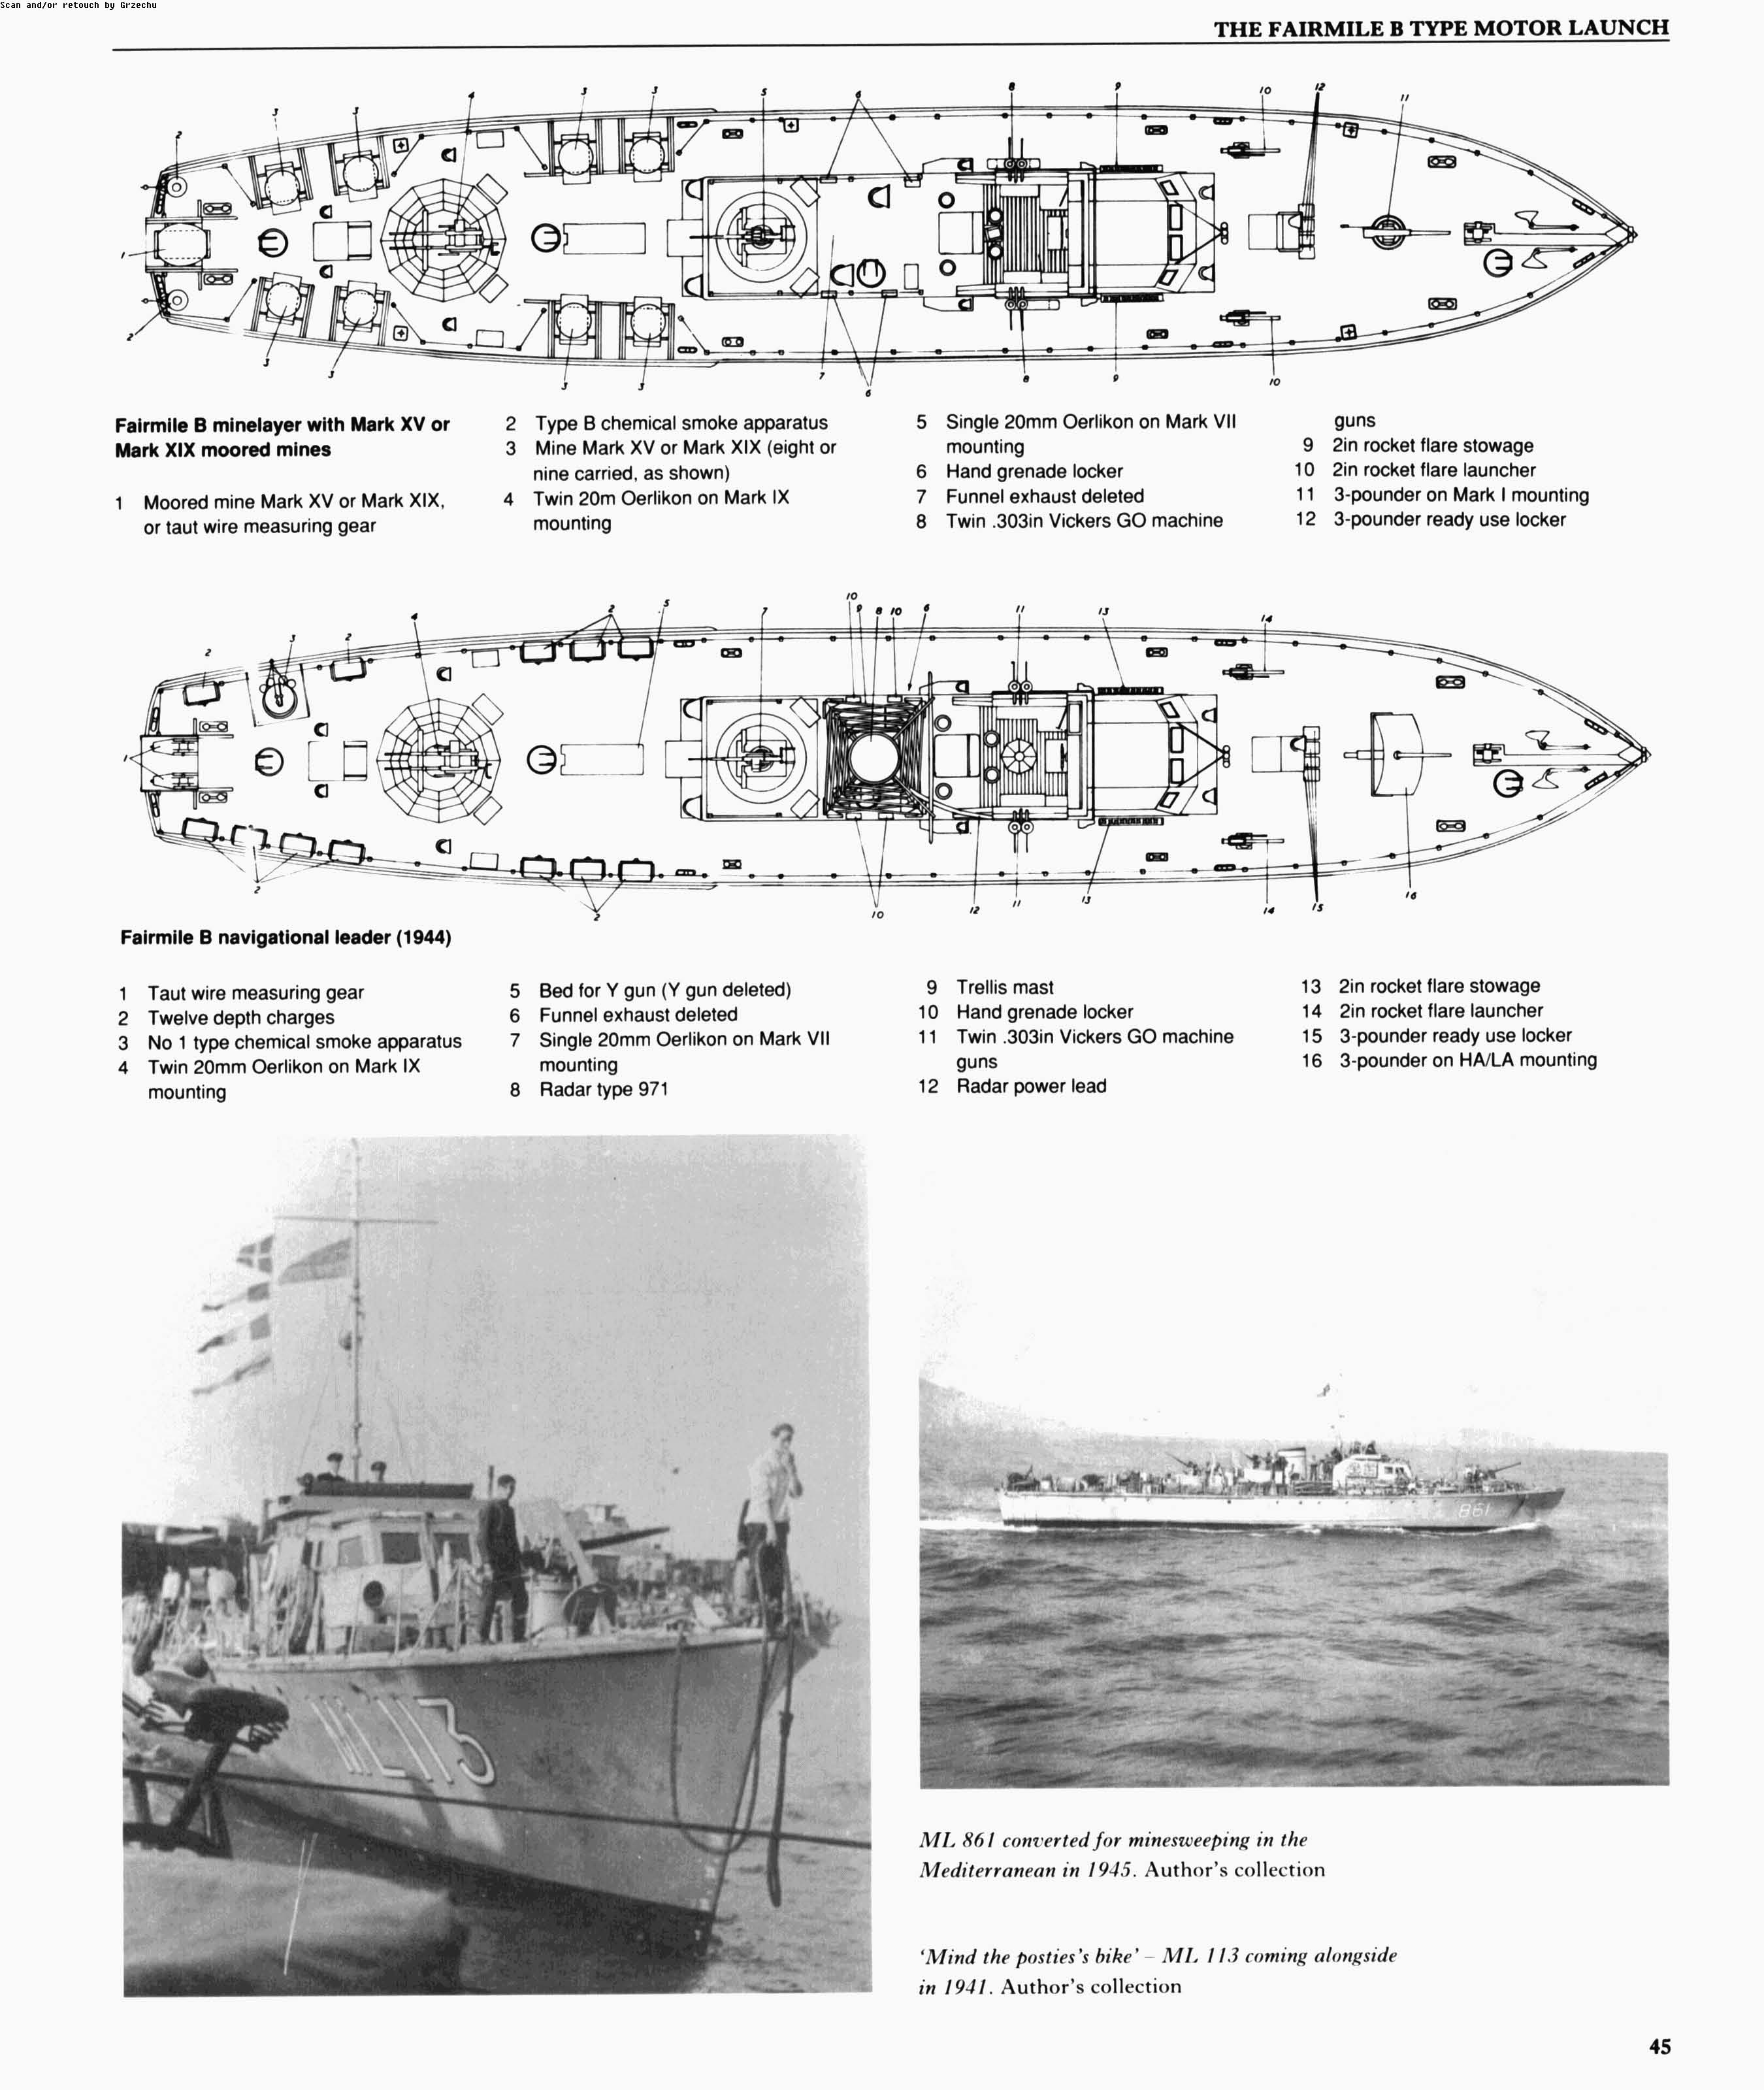 Allied Coastal Forces of World War II (1) Fairmile designs & U.S. submarine chasers_Page_047.jpg